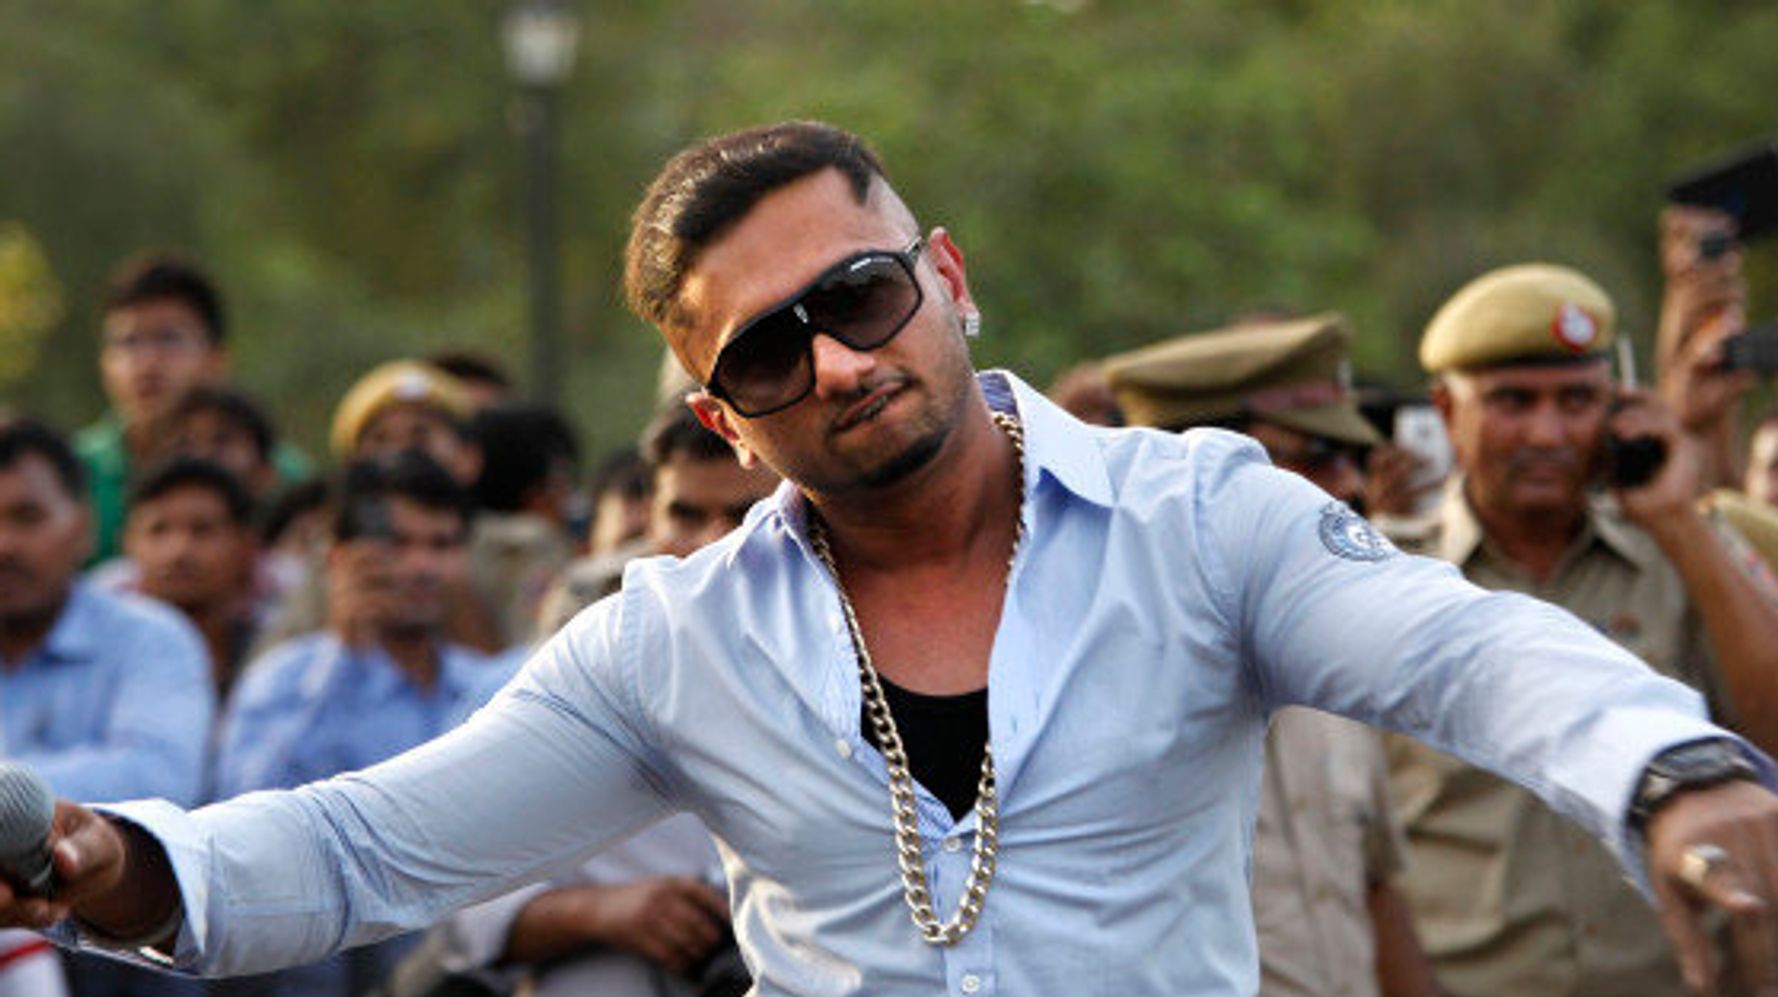 Farmers Are Blaring Yo Yo Honey Singh's Music To Scare Away Wild Animals  And It's Working | HuffPost News